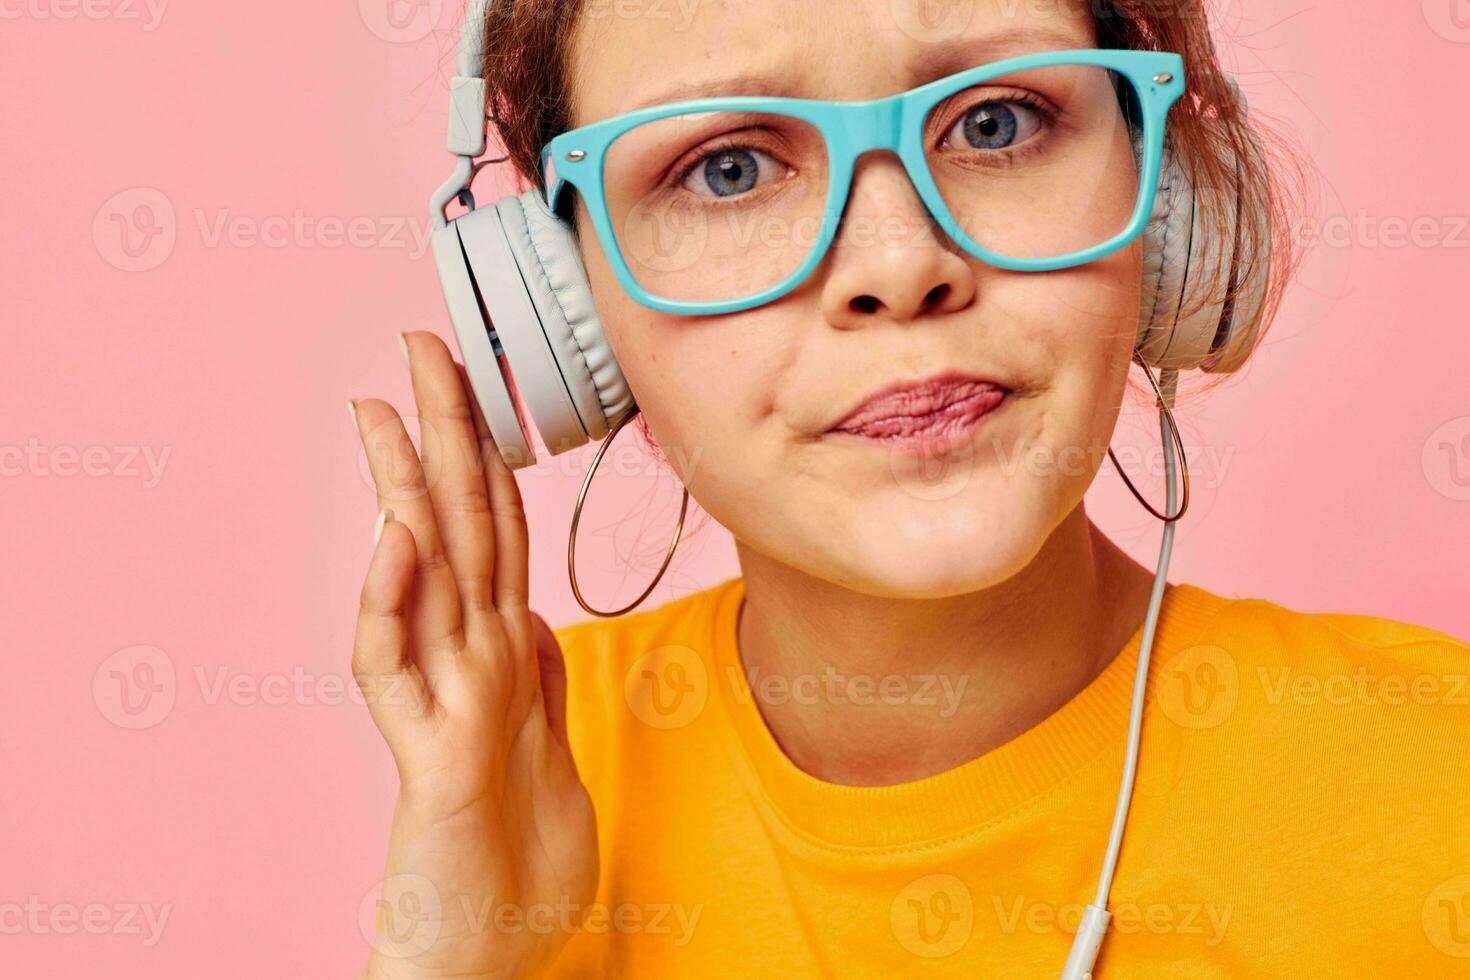 beautiful woman grimace headphones music entertainment technology pink background unaltered photo